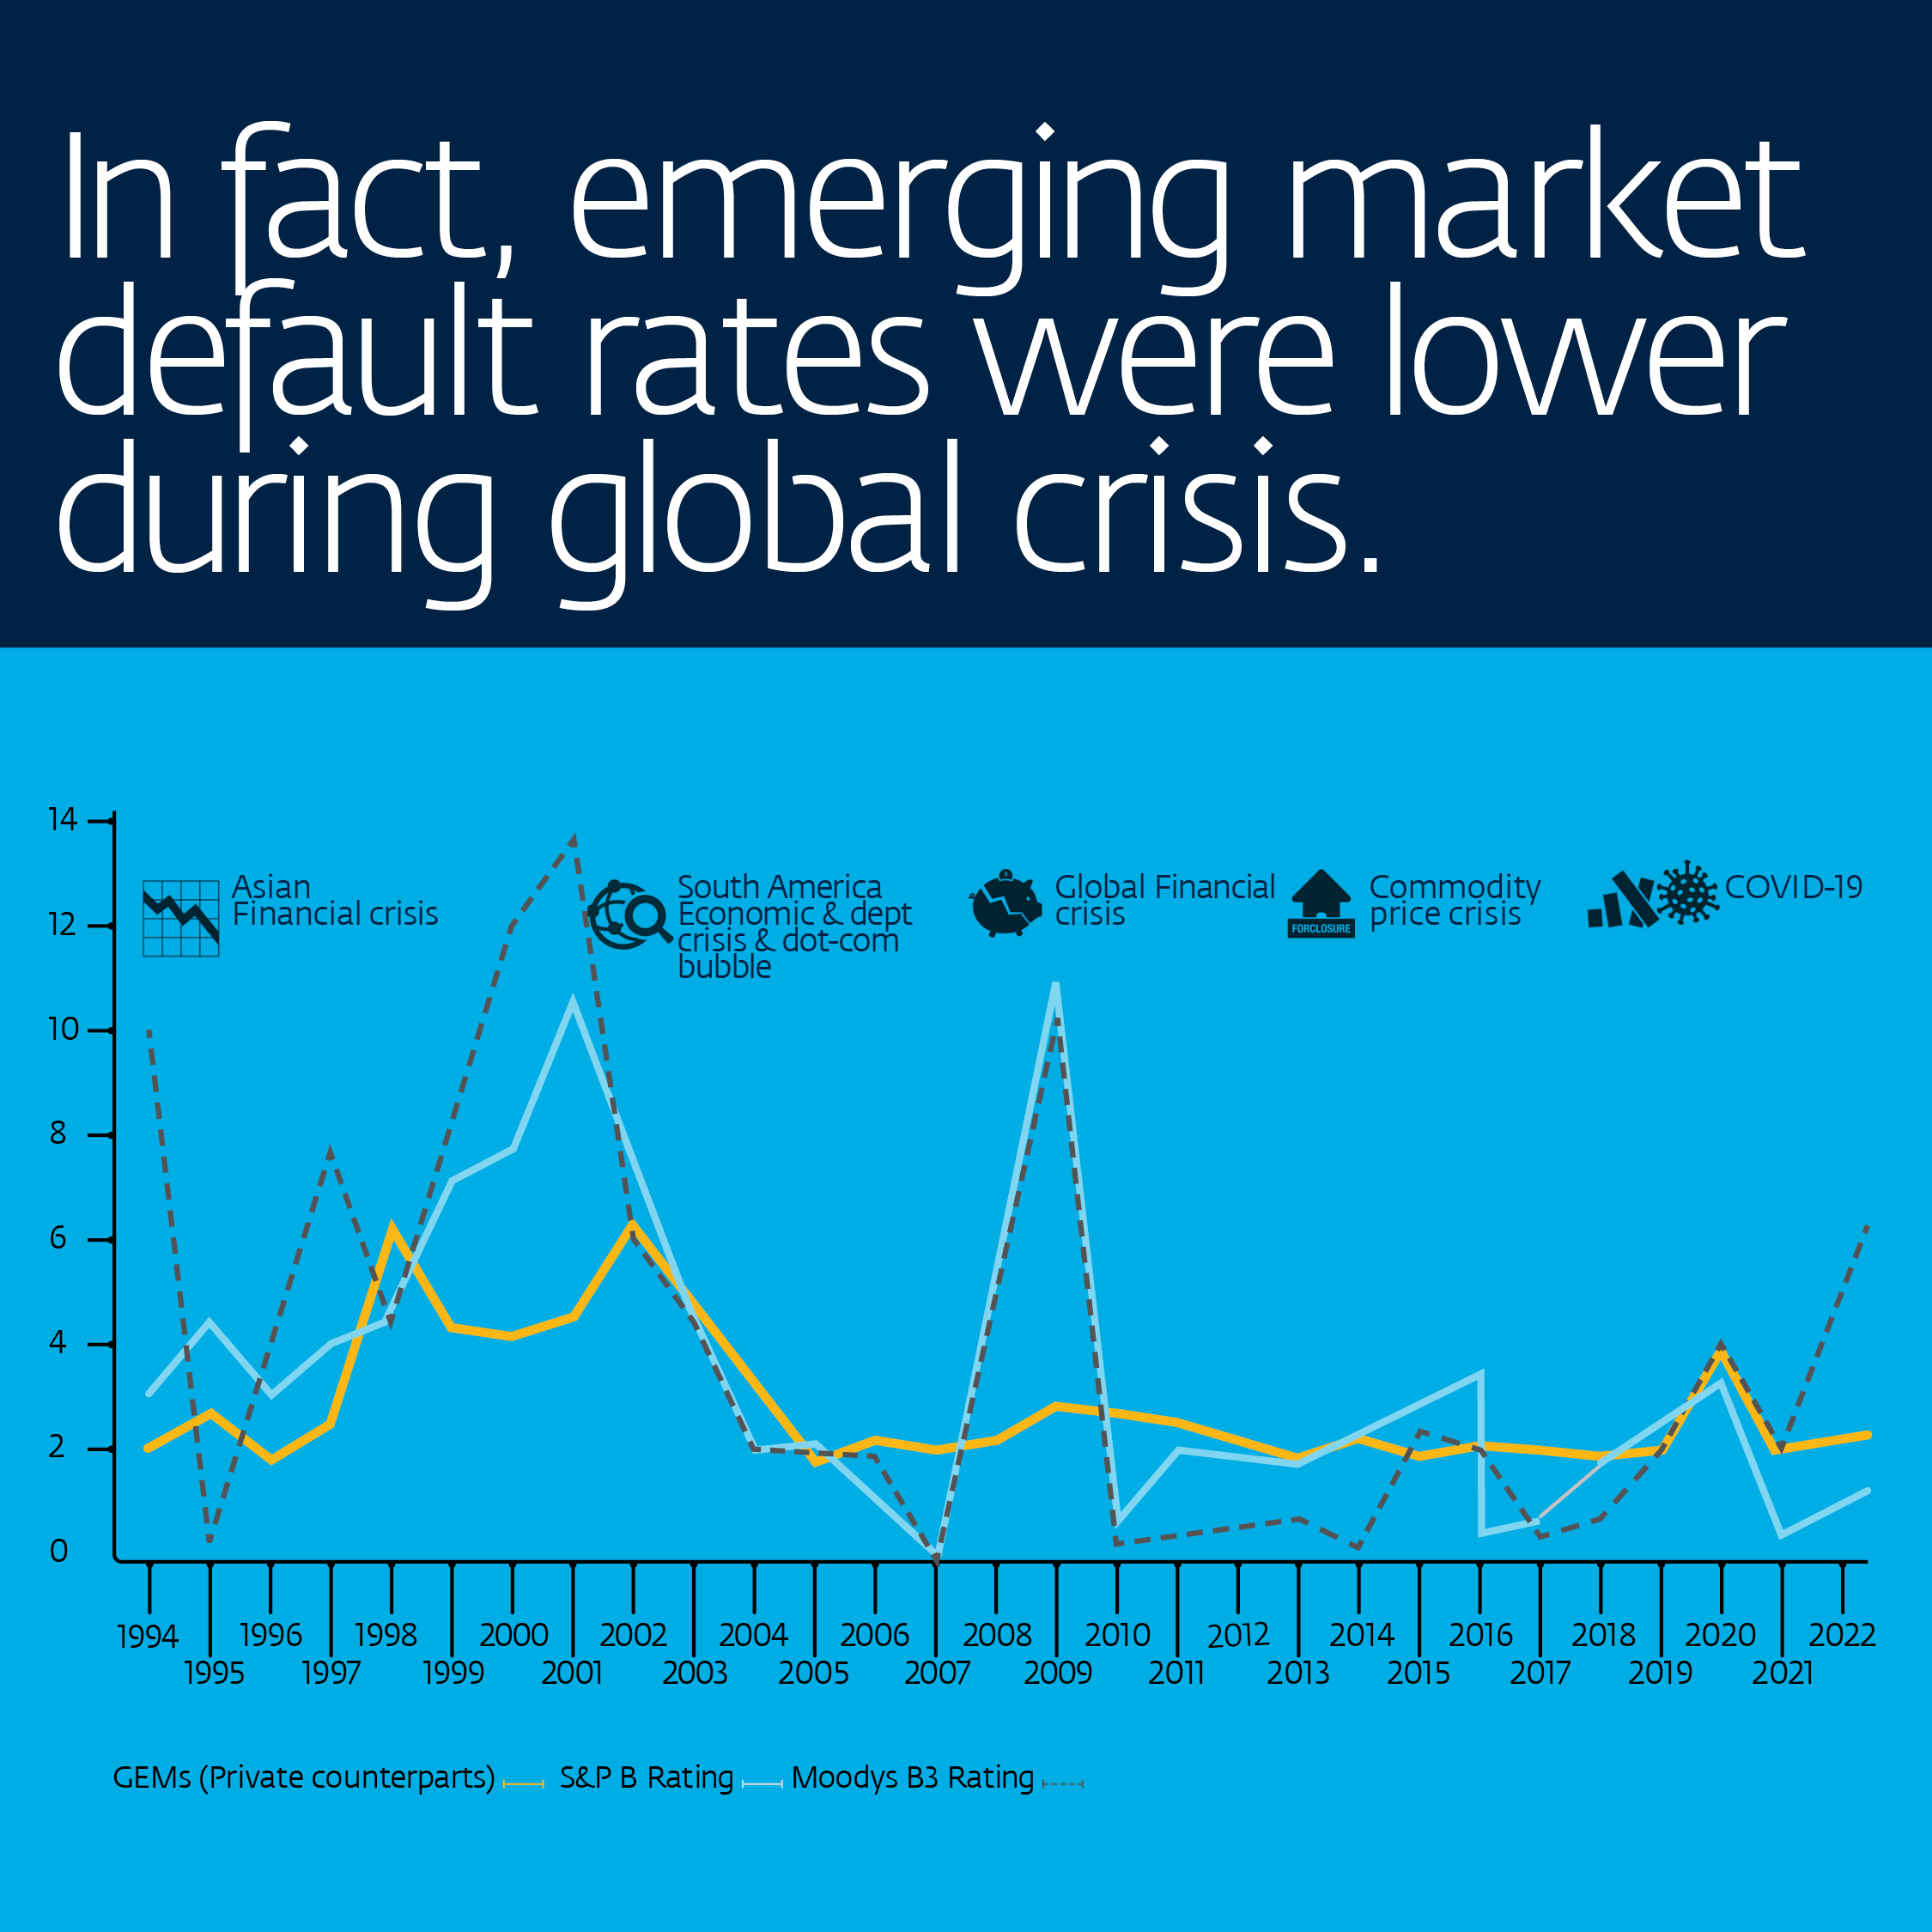 Emerging market default rates were lower during global crisis.